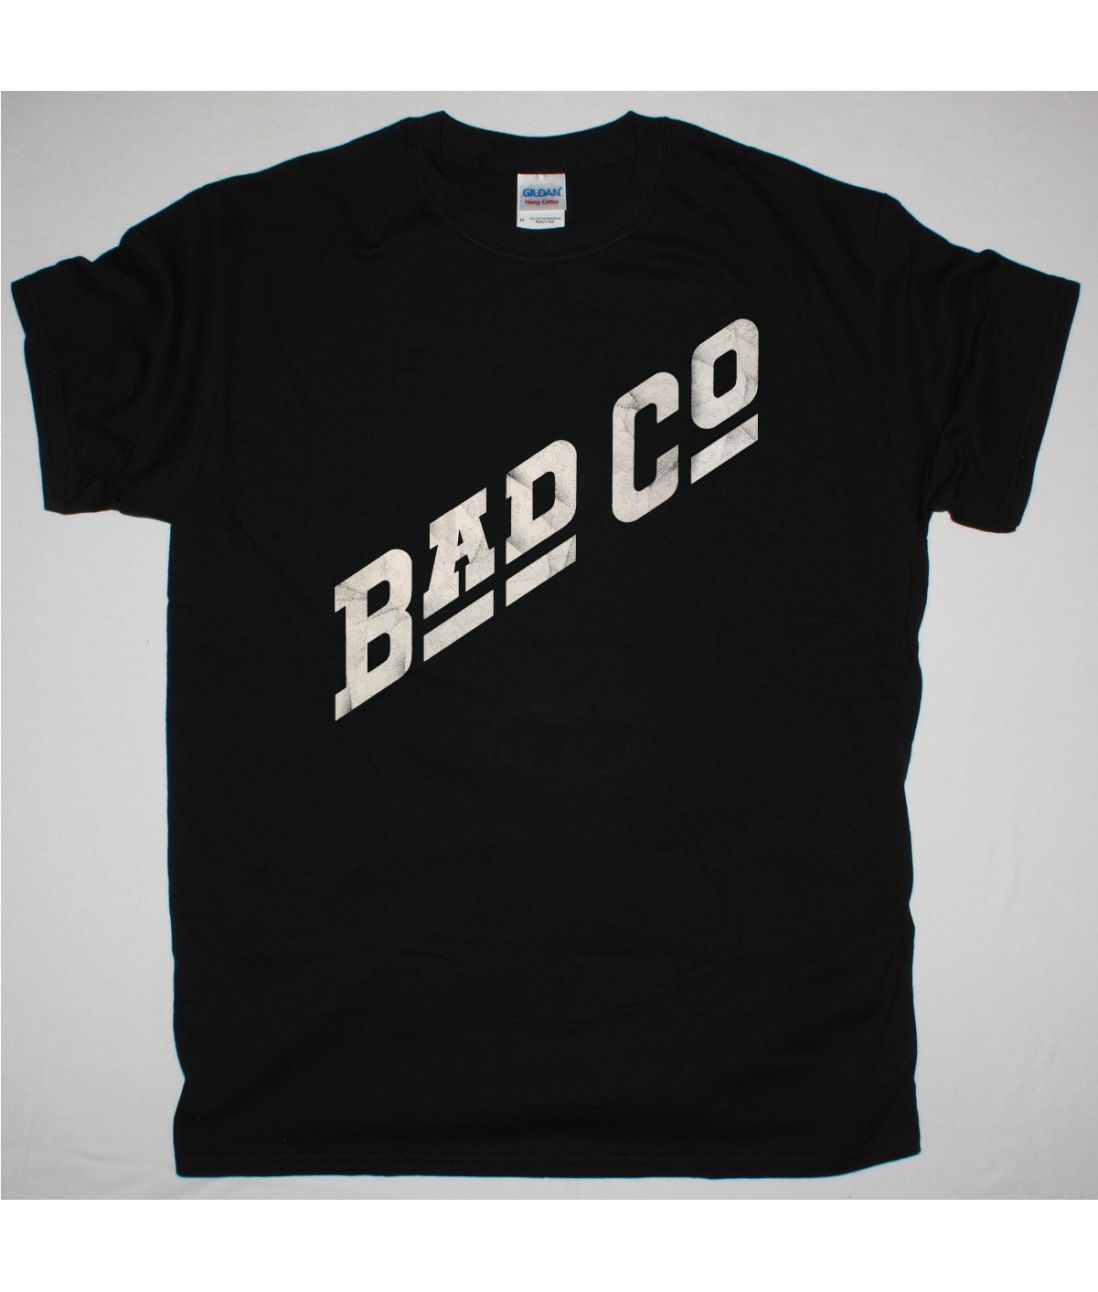 BAD COMPANY LOGO NEW BLACK T SHIRT - Best Rock T-shirts